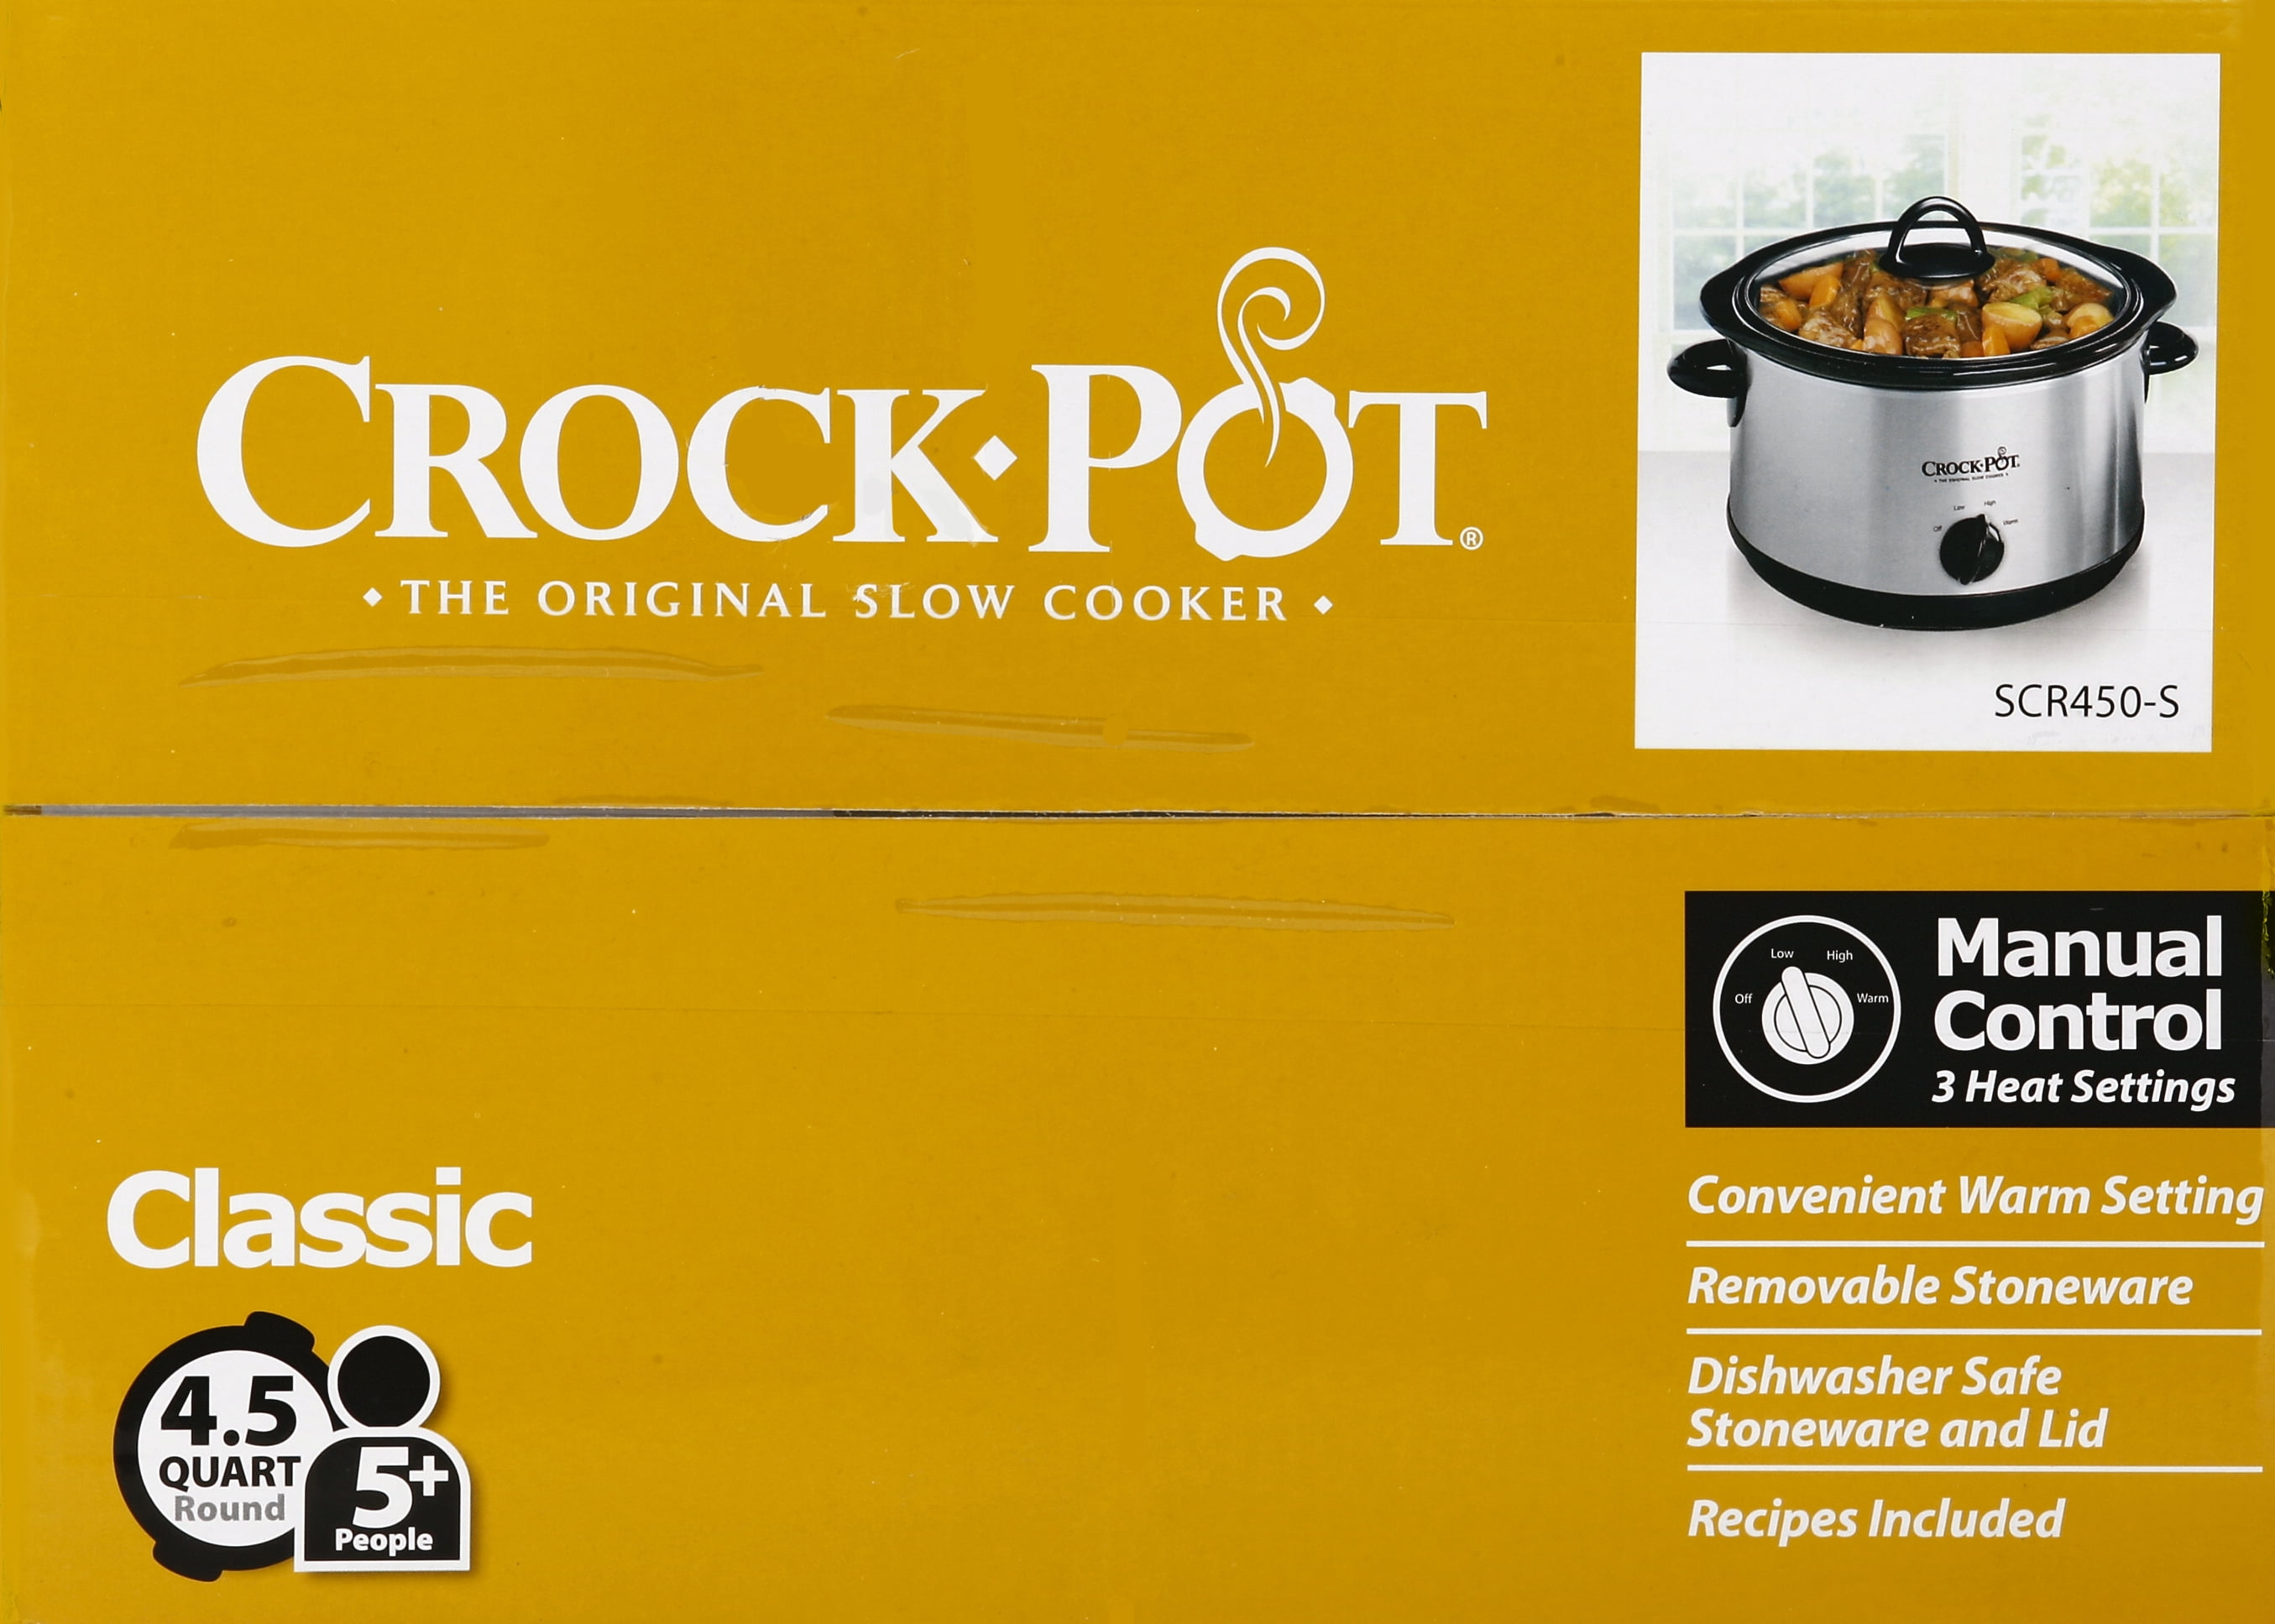 Crock-Pot® Classic Stainless Steel Slow Cooker - Silver/Black, 4.5 qt -  Ralphs